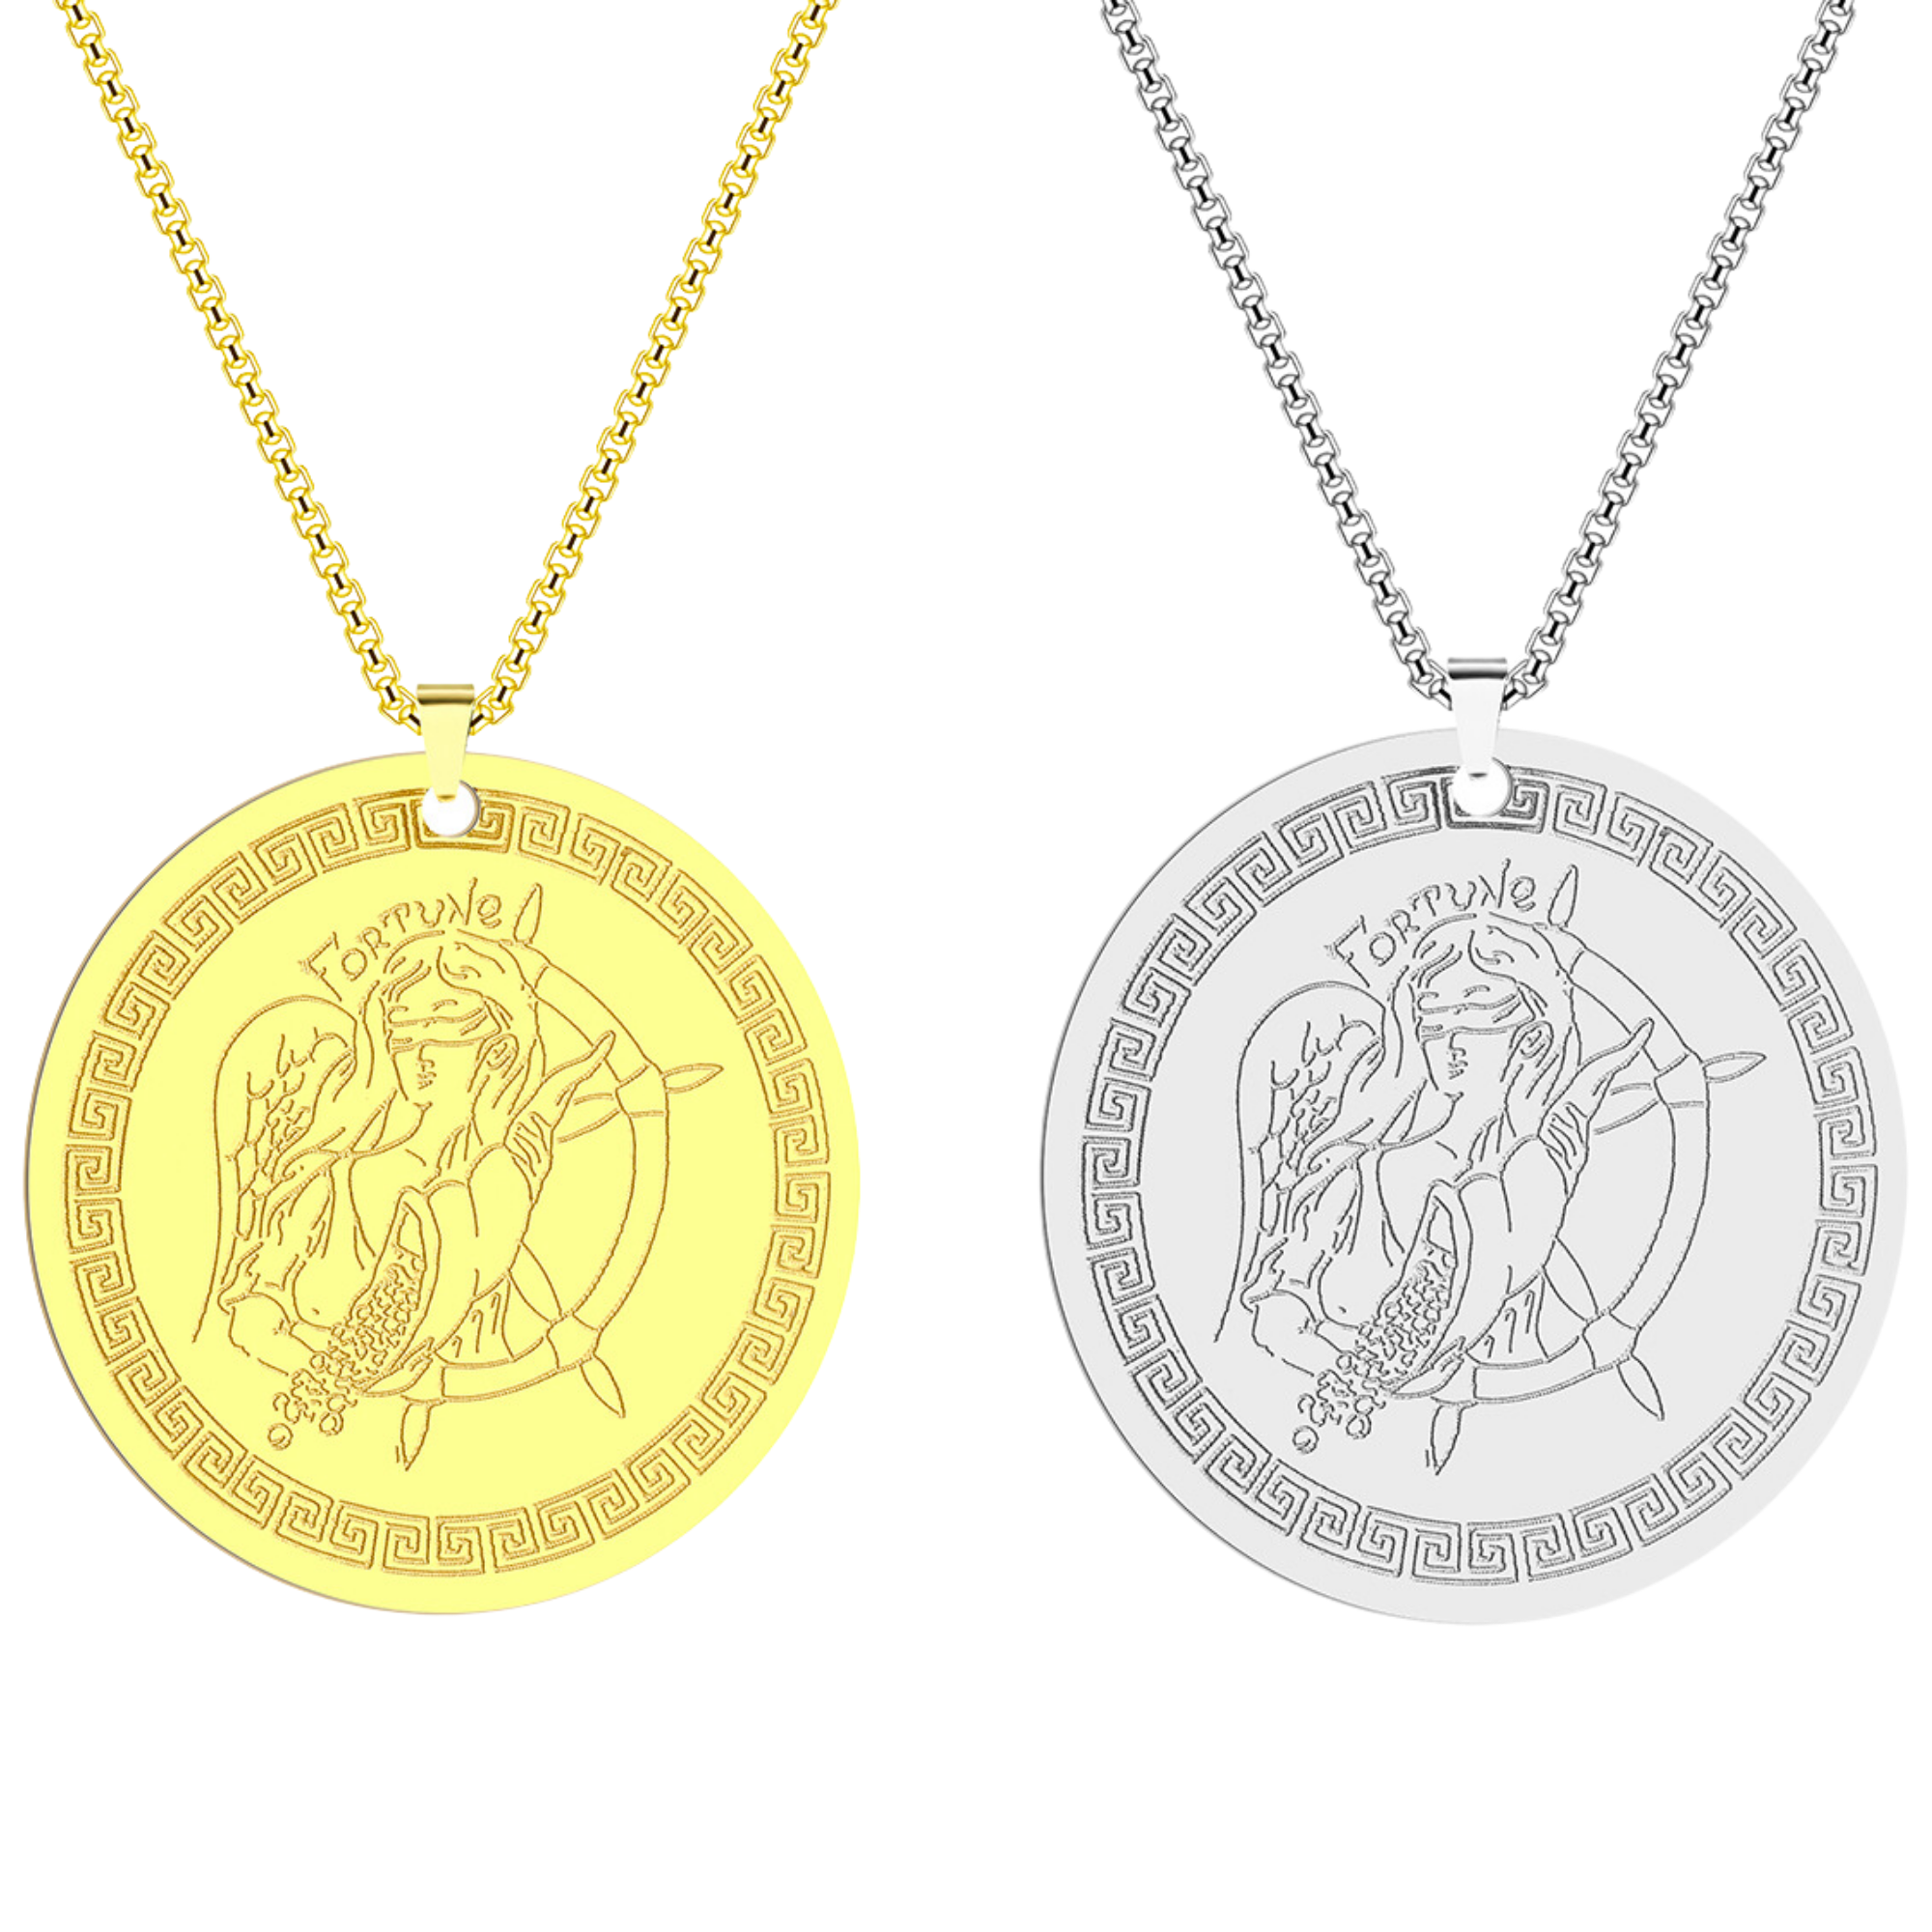 Goddess Fortuna Necklace | Greek Mythology Tyche Amulet | Greco-Roman Goddess of Luck Pendant | Pagan Deity Worship Jewelry Gift | Apollo Tarot Shop